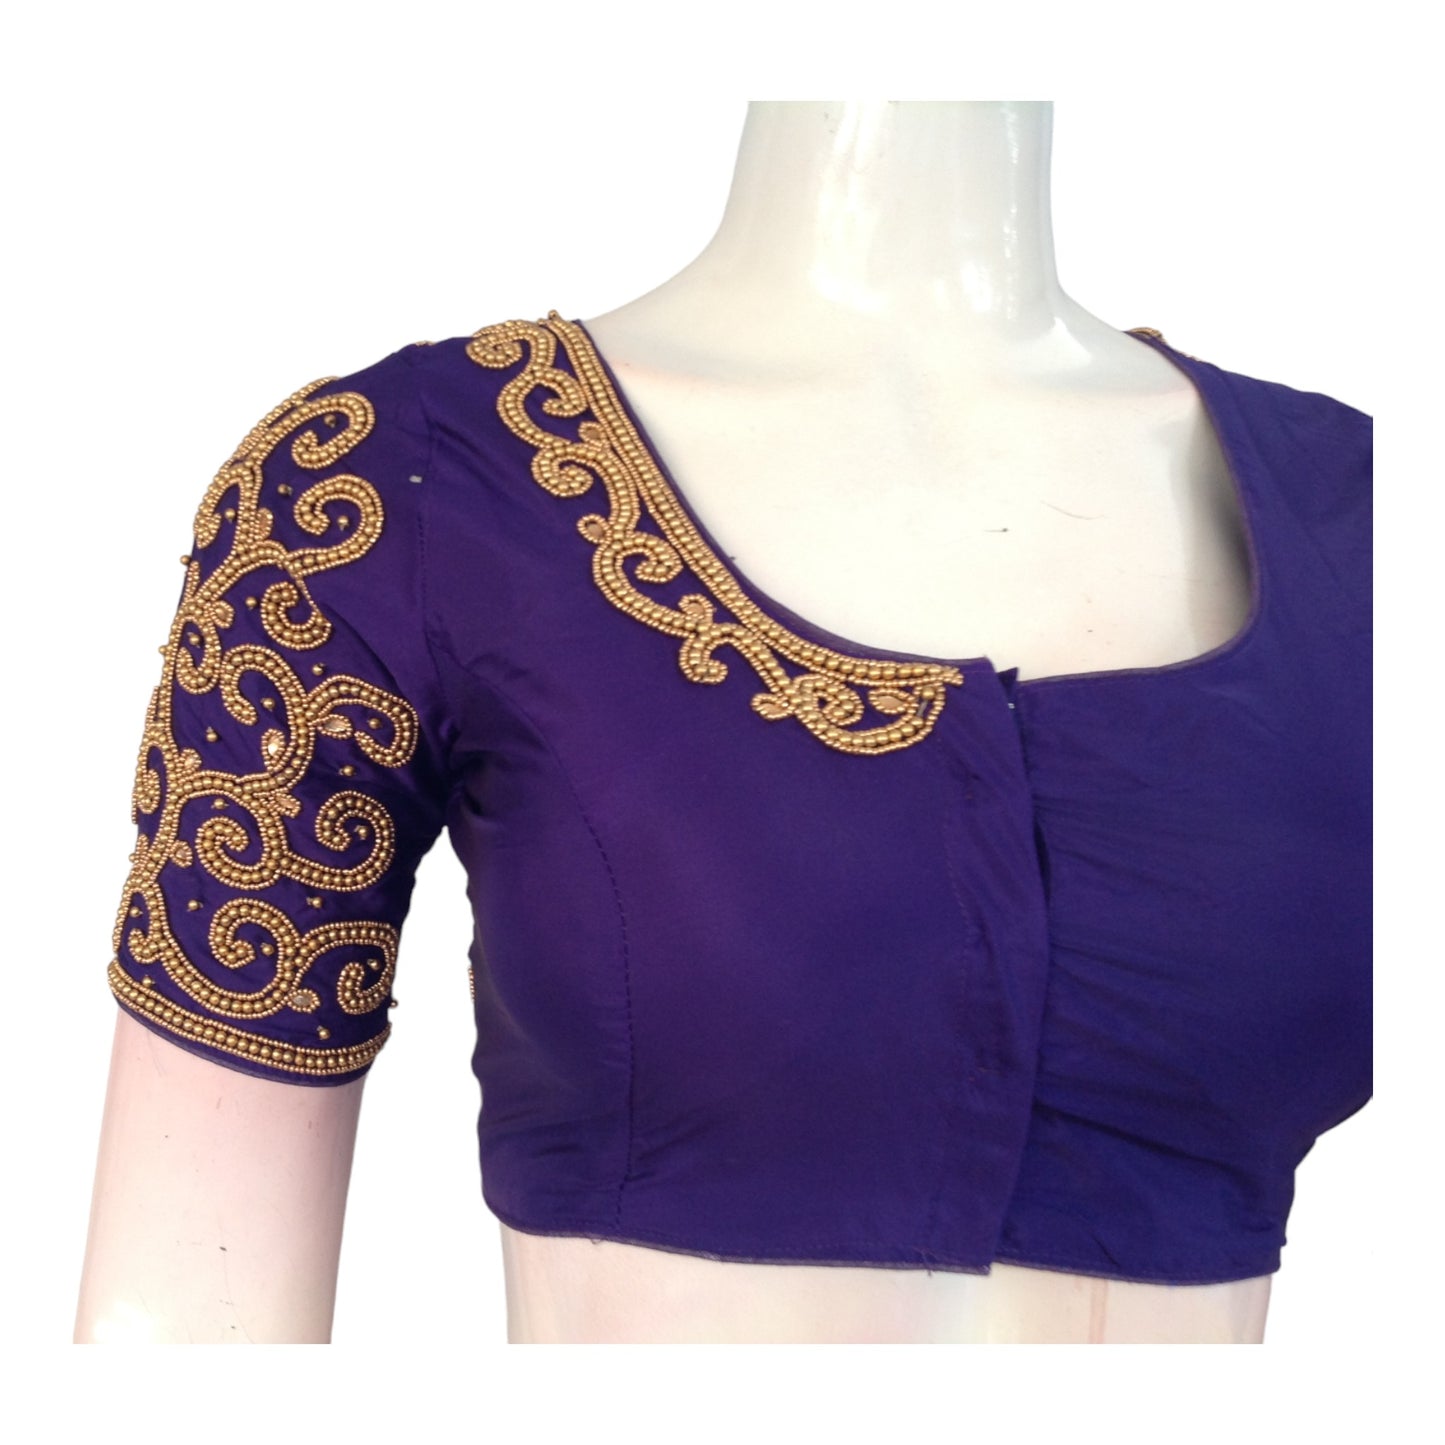 Exquisite Dark Purple Aari Hand Work Saree Blouses| Party Wear | Made in India